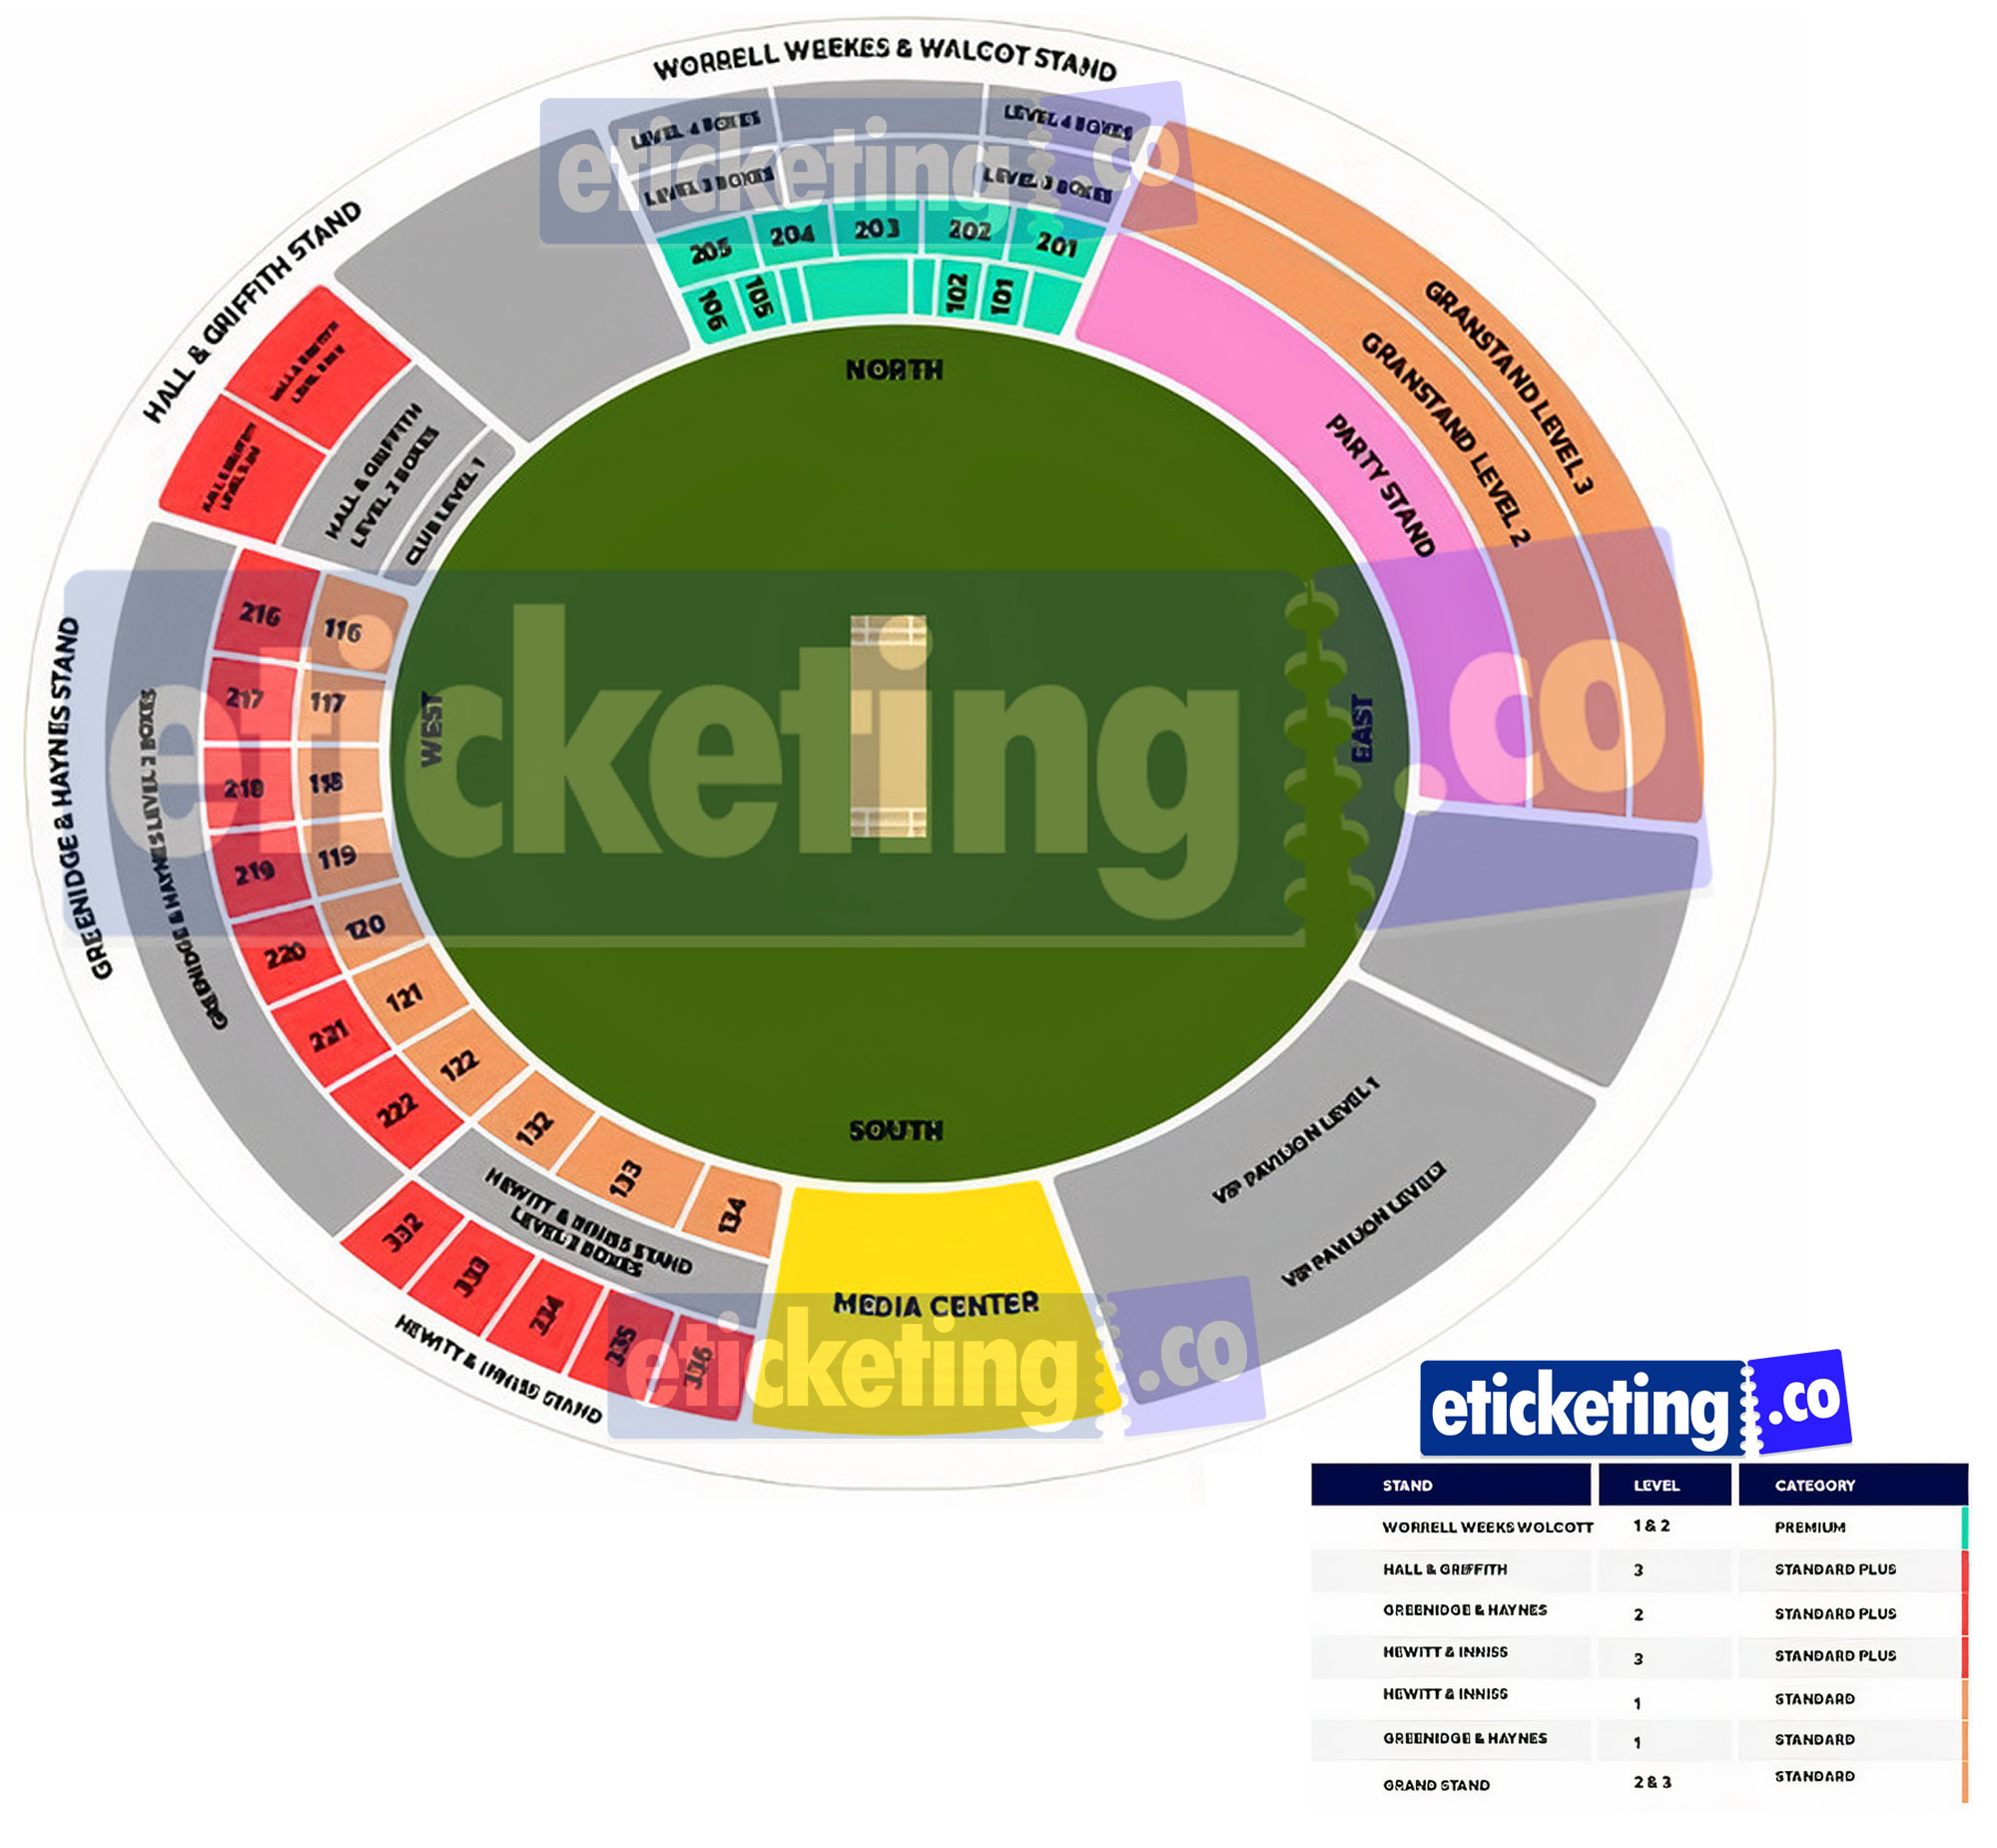 Kensington Oval West Indies vs England 1st T20I Venue Seating Plan